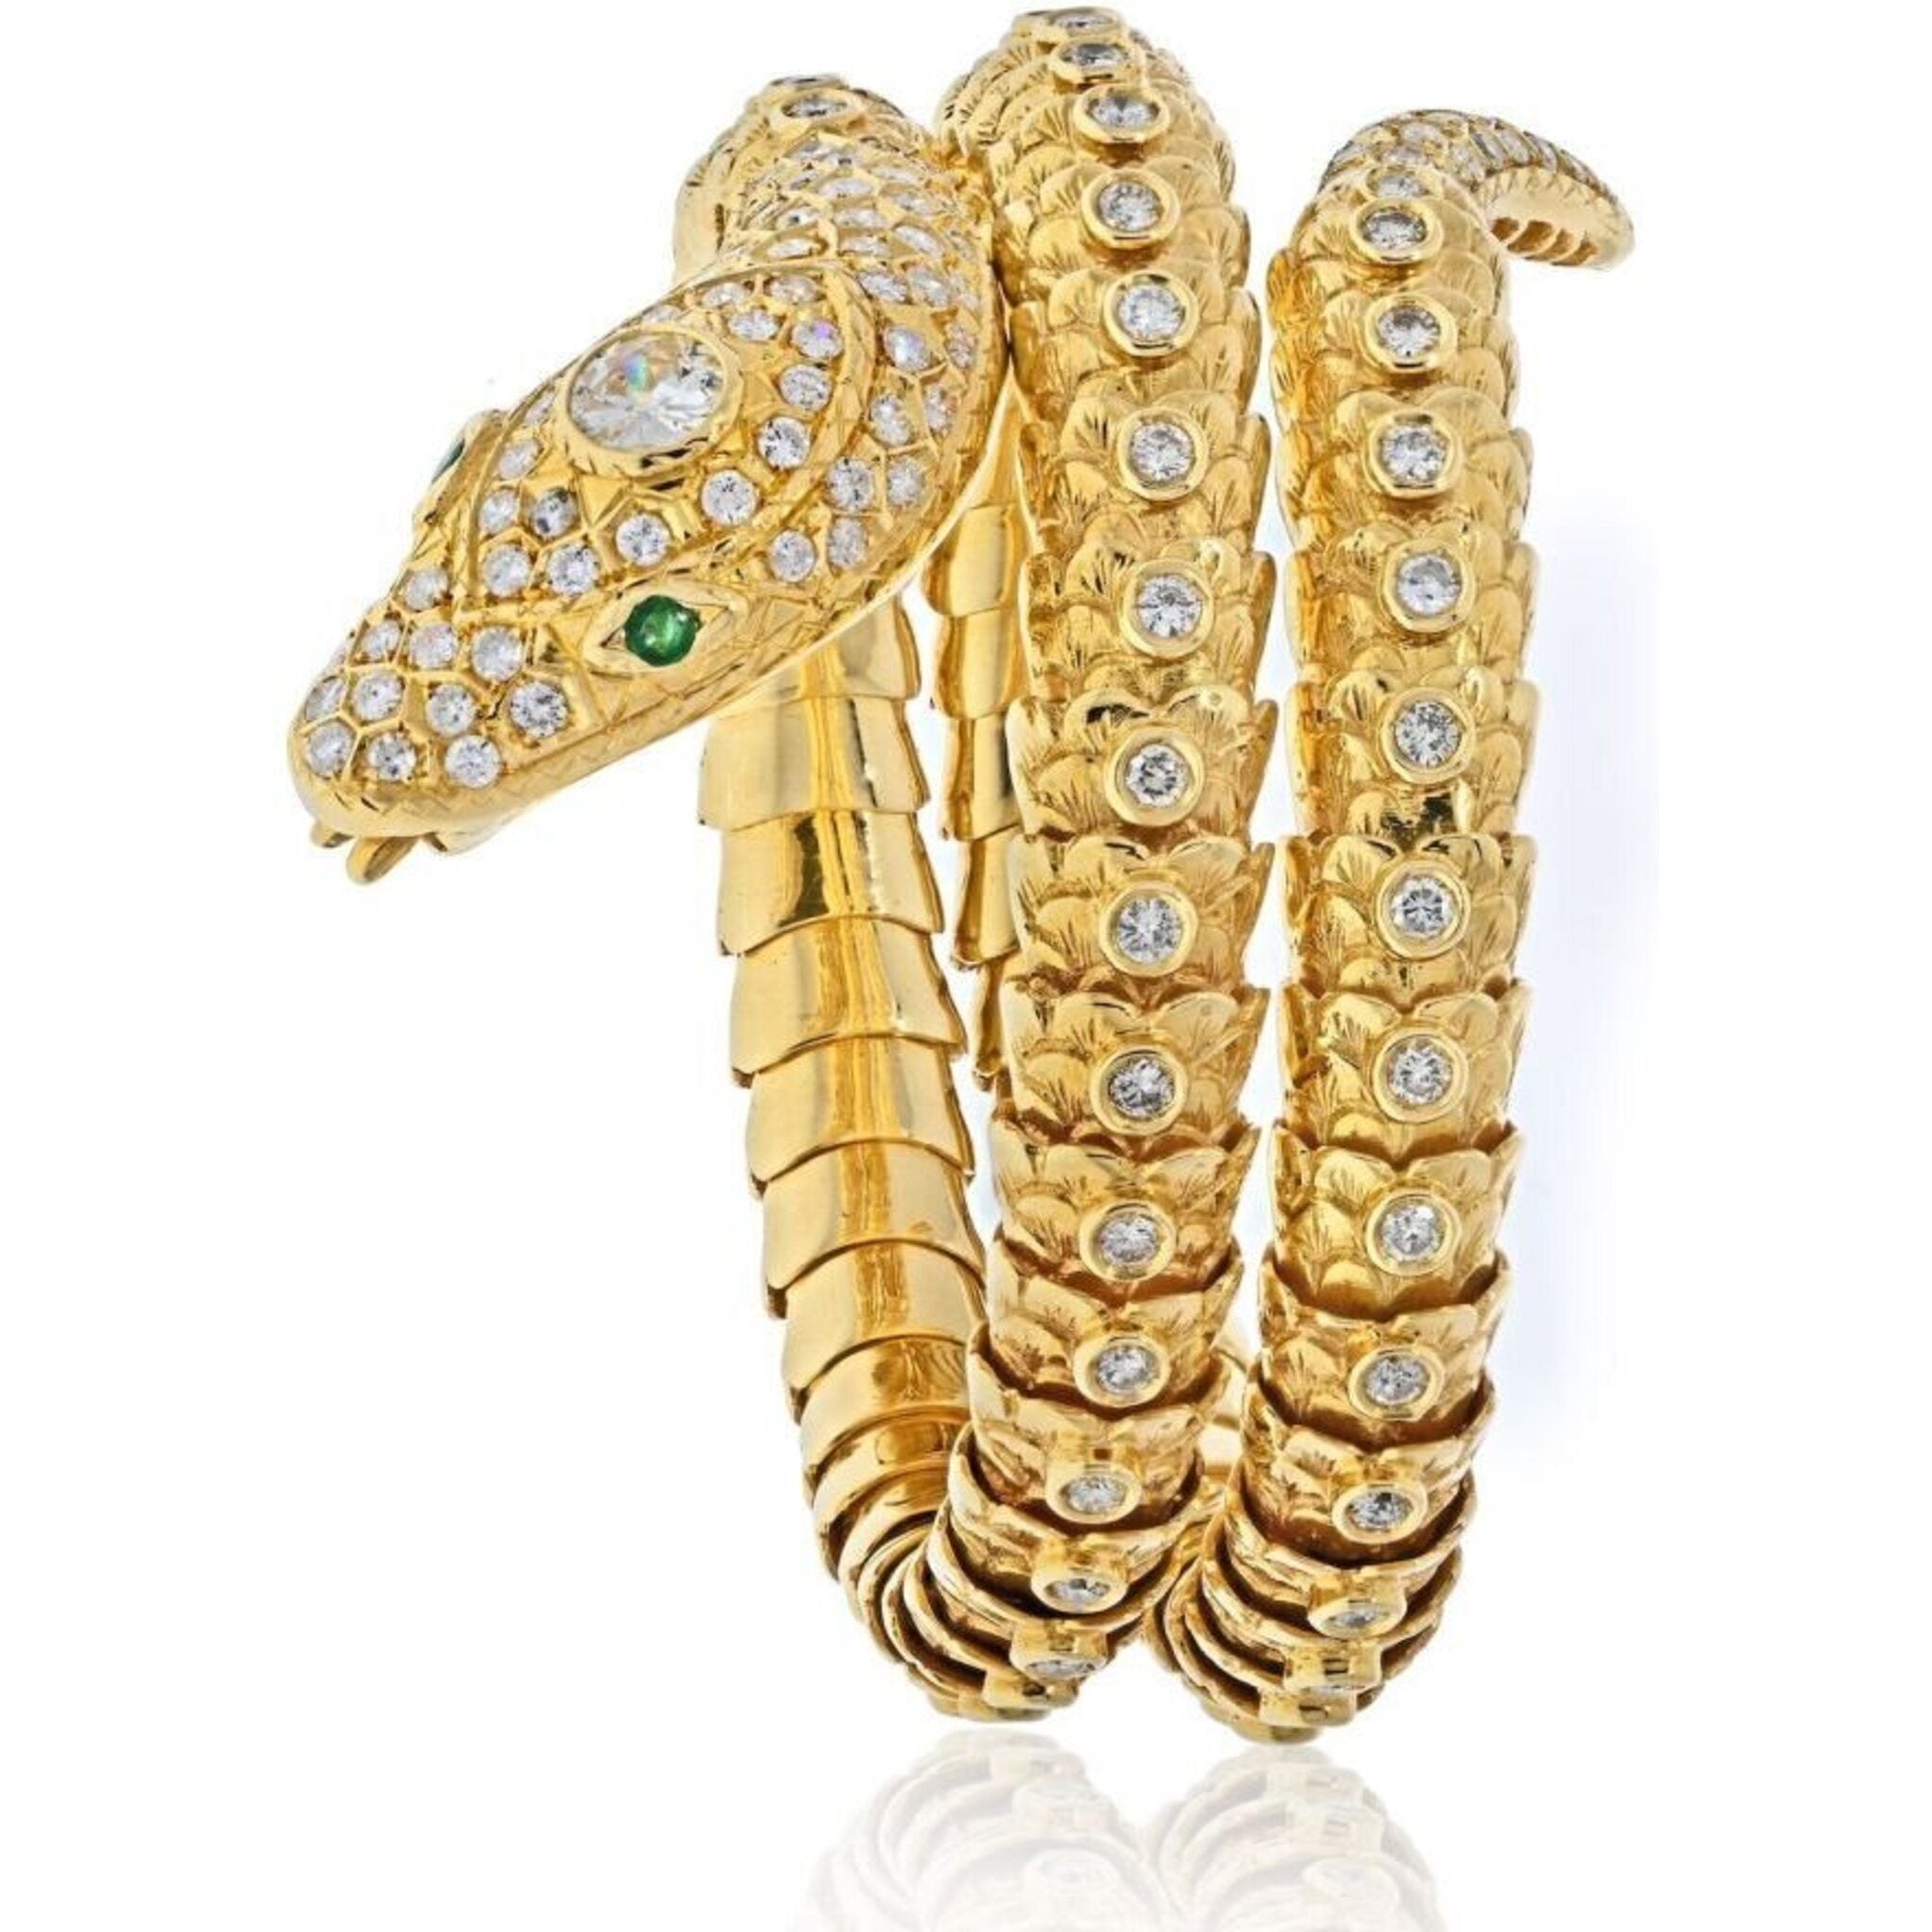 Rubans Serenity in Luxury AD's Elegant Bracelet Masterpieces